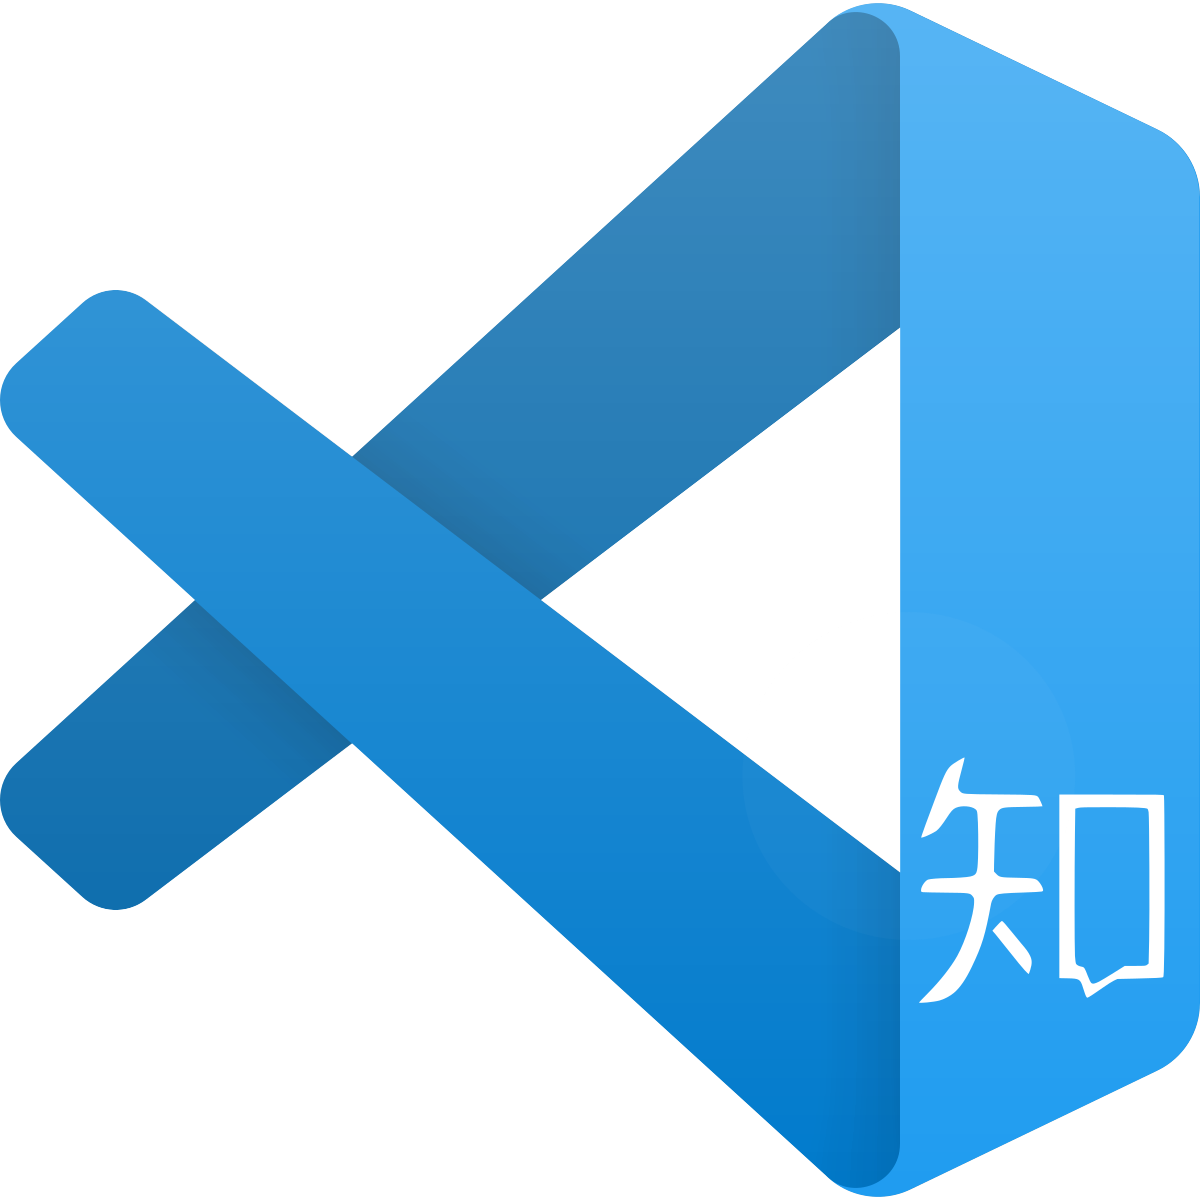 vscode-zhihu logo